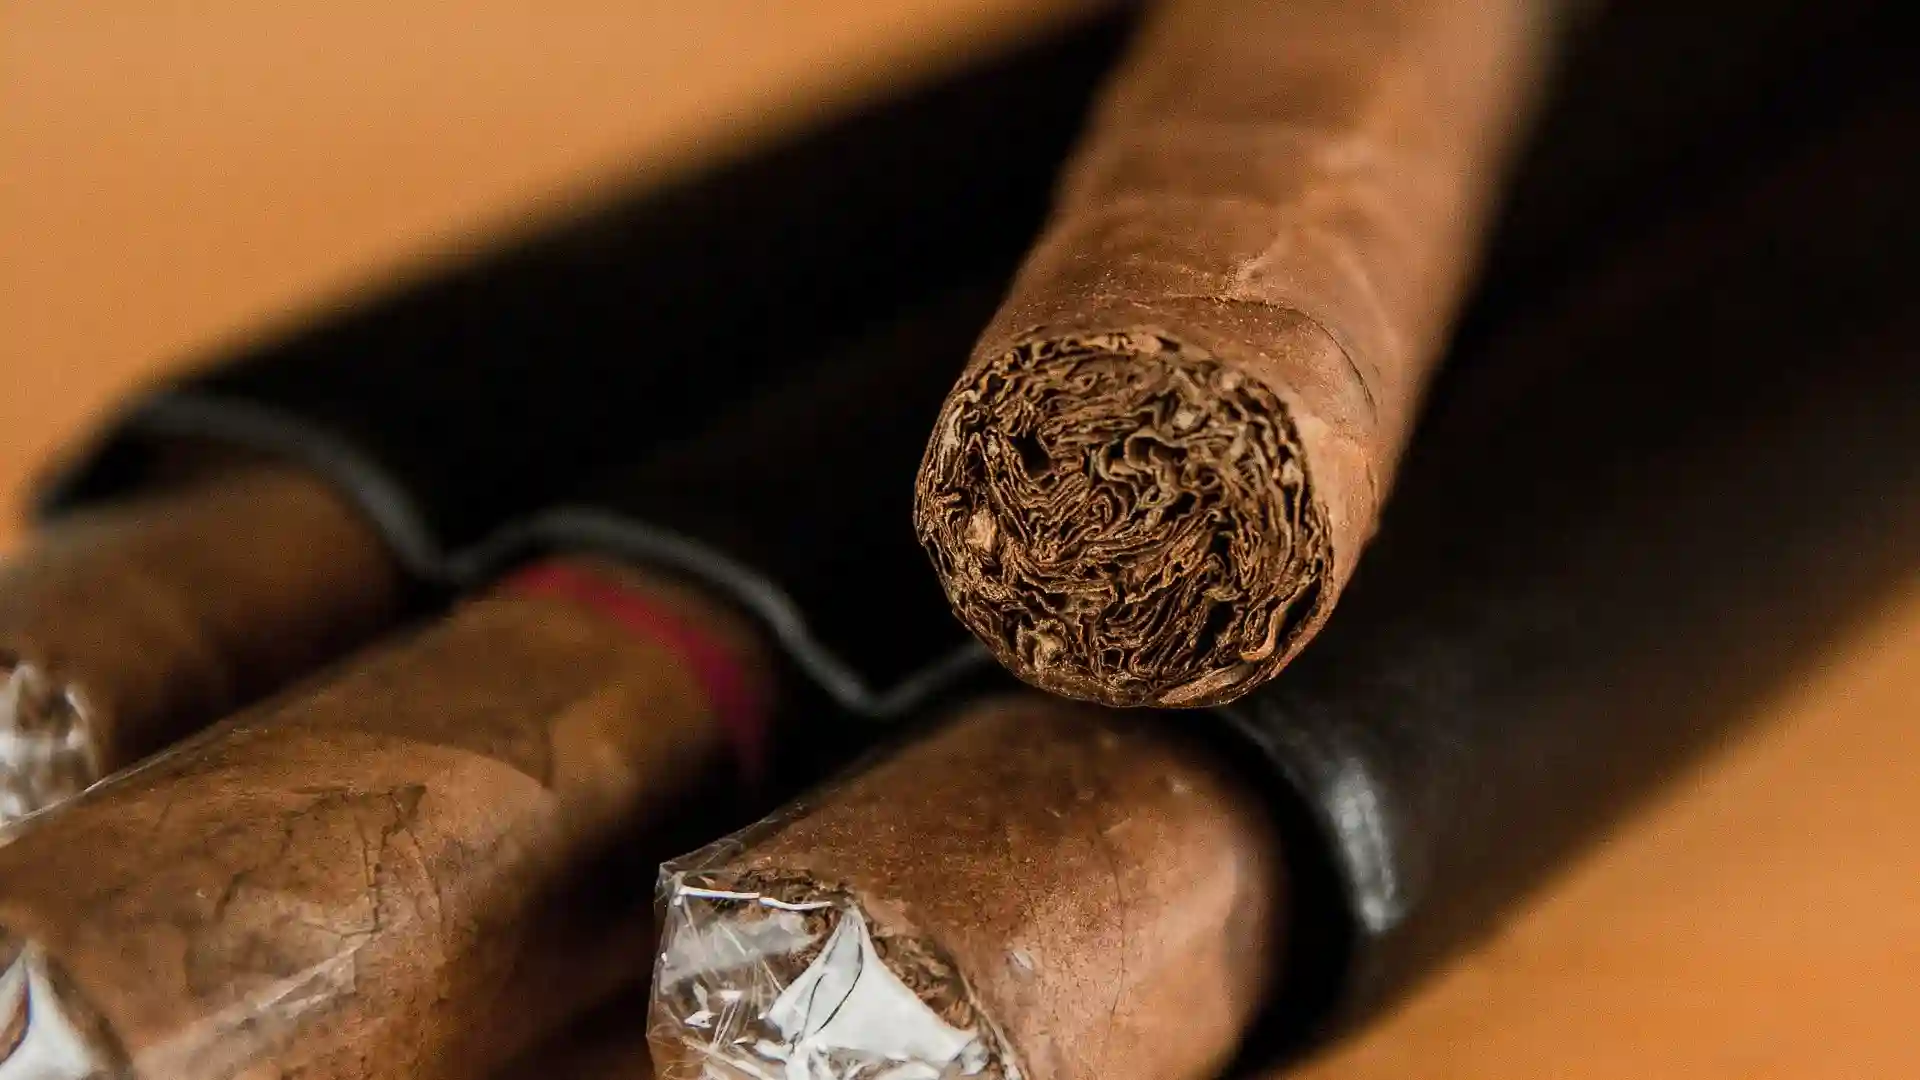 zigarren etui, aufbewahrung, zigarren transport, zigarren schützen, edel, leder, hochwertig, online kaufen